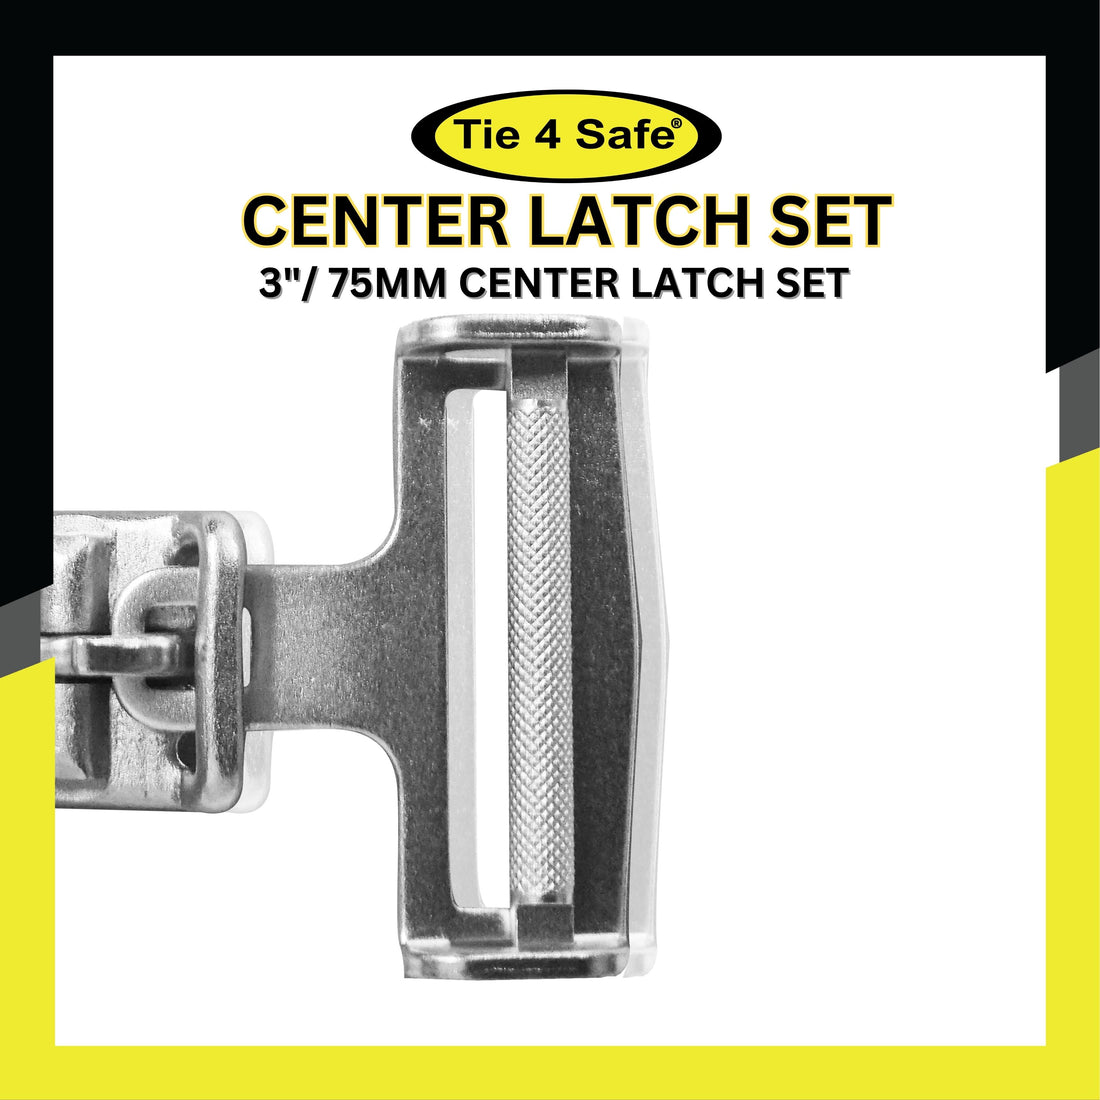 3"/ 75mm Center Latch Set